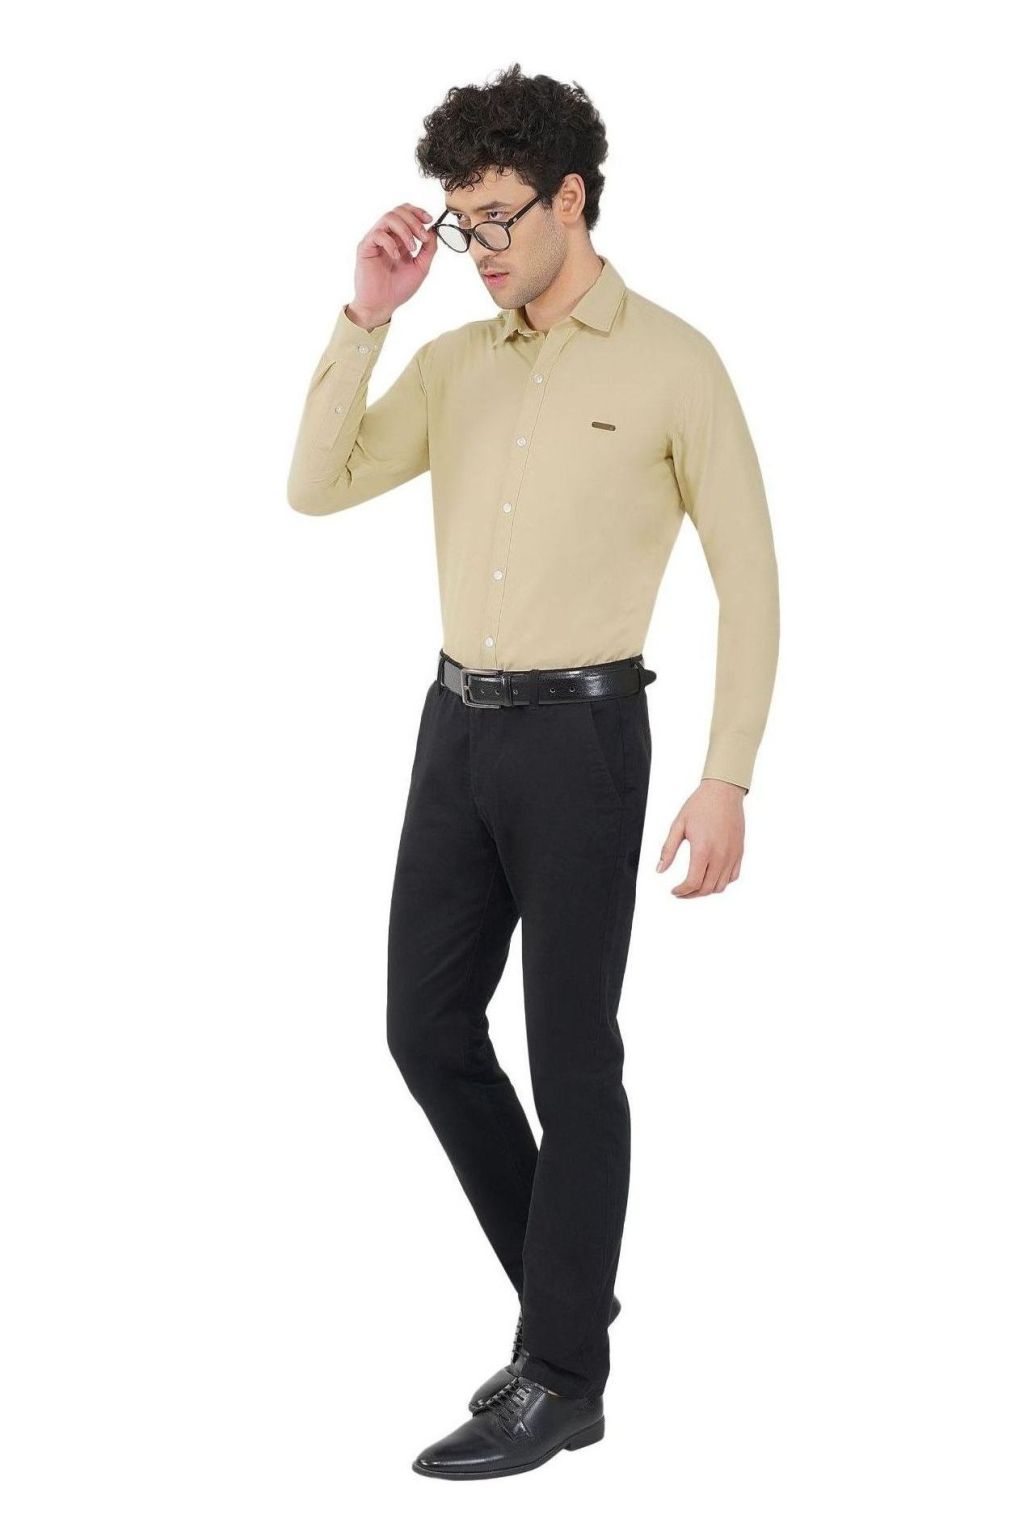 BANG SAFETY 120 GSM Pant Shirt Uniform - Poly Cotton (Khaki, 2X-Large, Shirt  - 44, Pant - 36) : Amazon.in: Industrial & Scientific